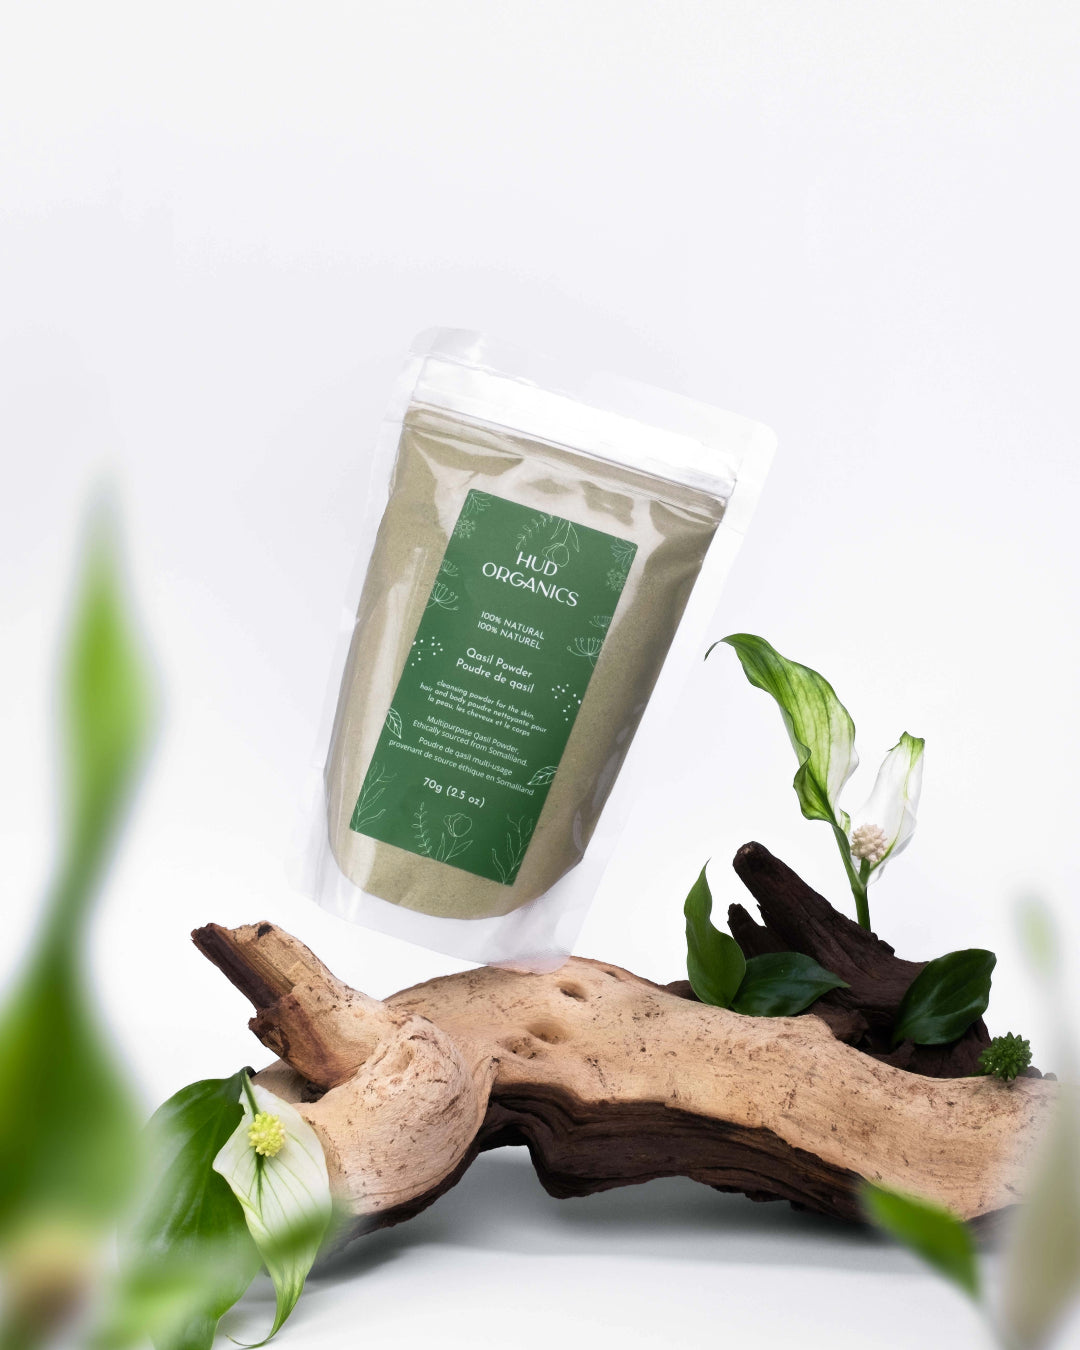 Organic Qasil Powder for Hair and Skin, Pack of 1, 70gm